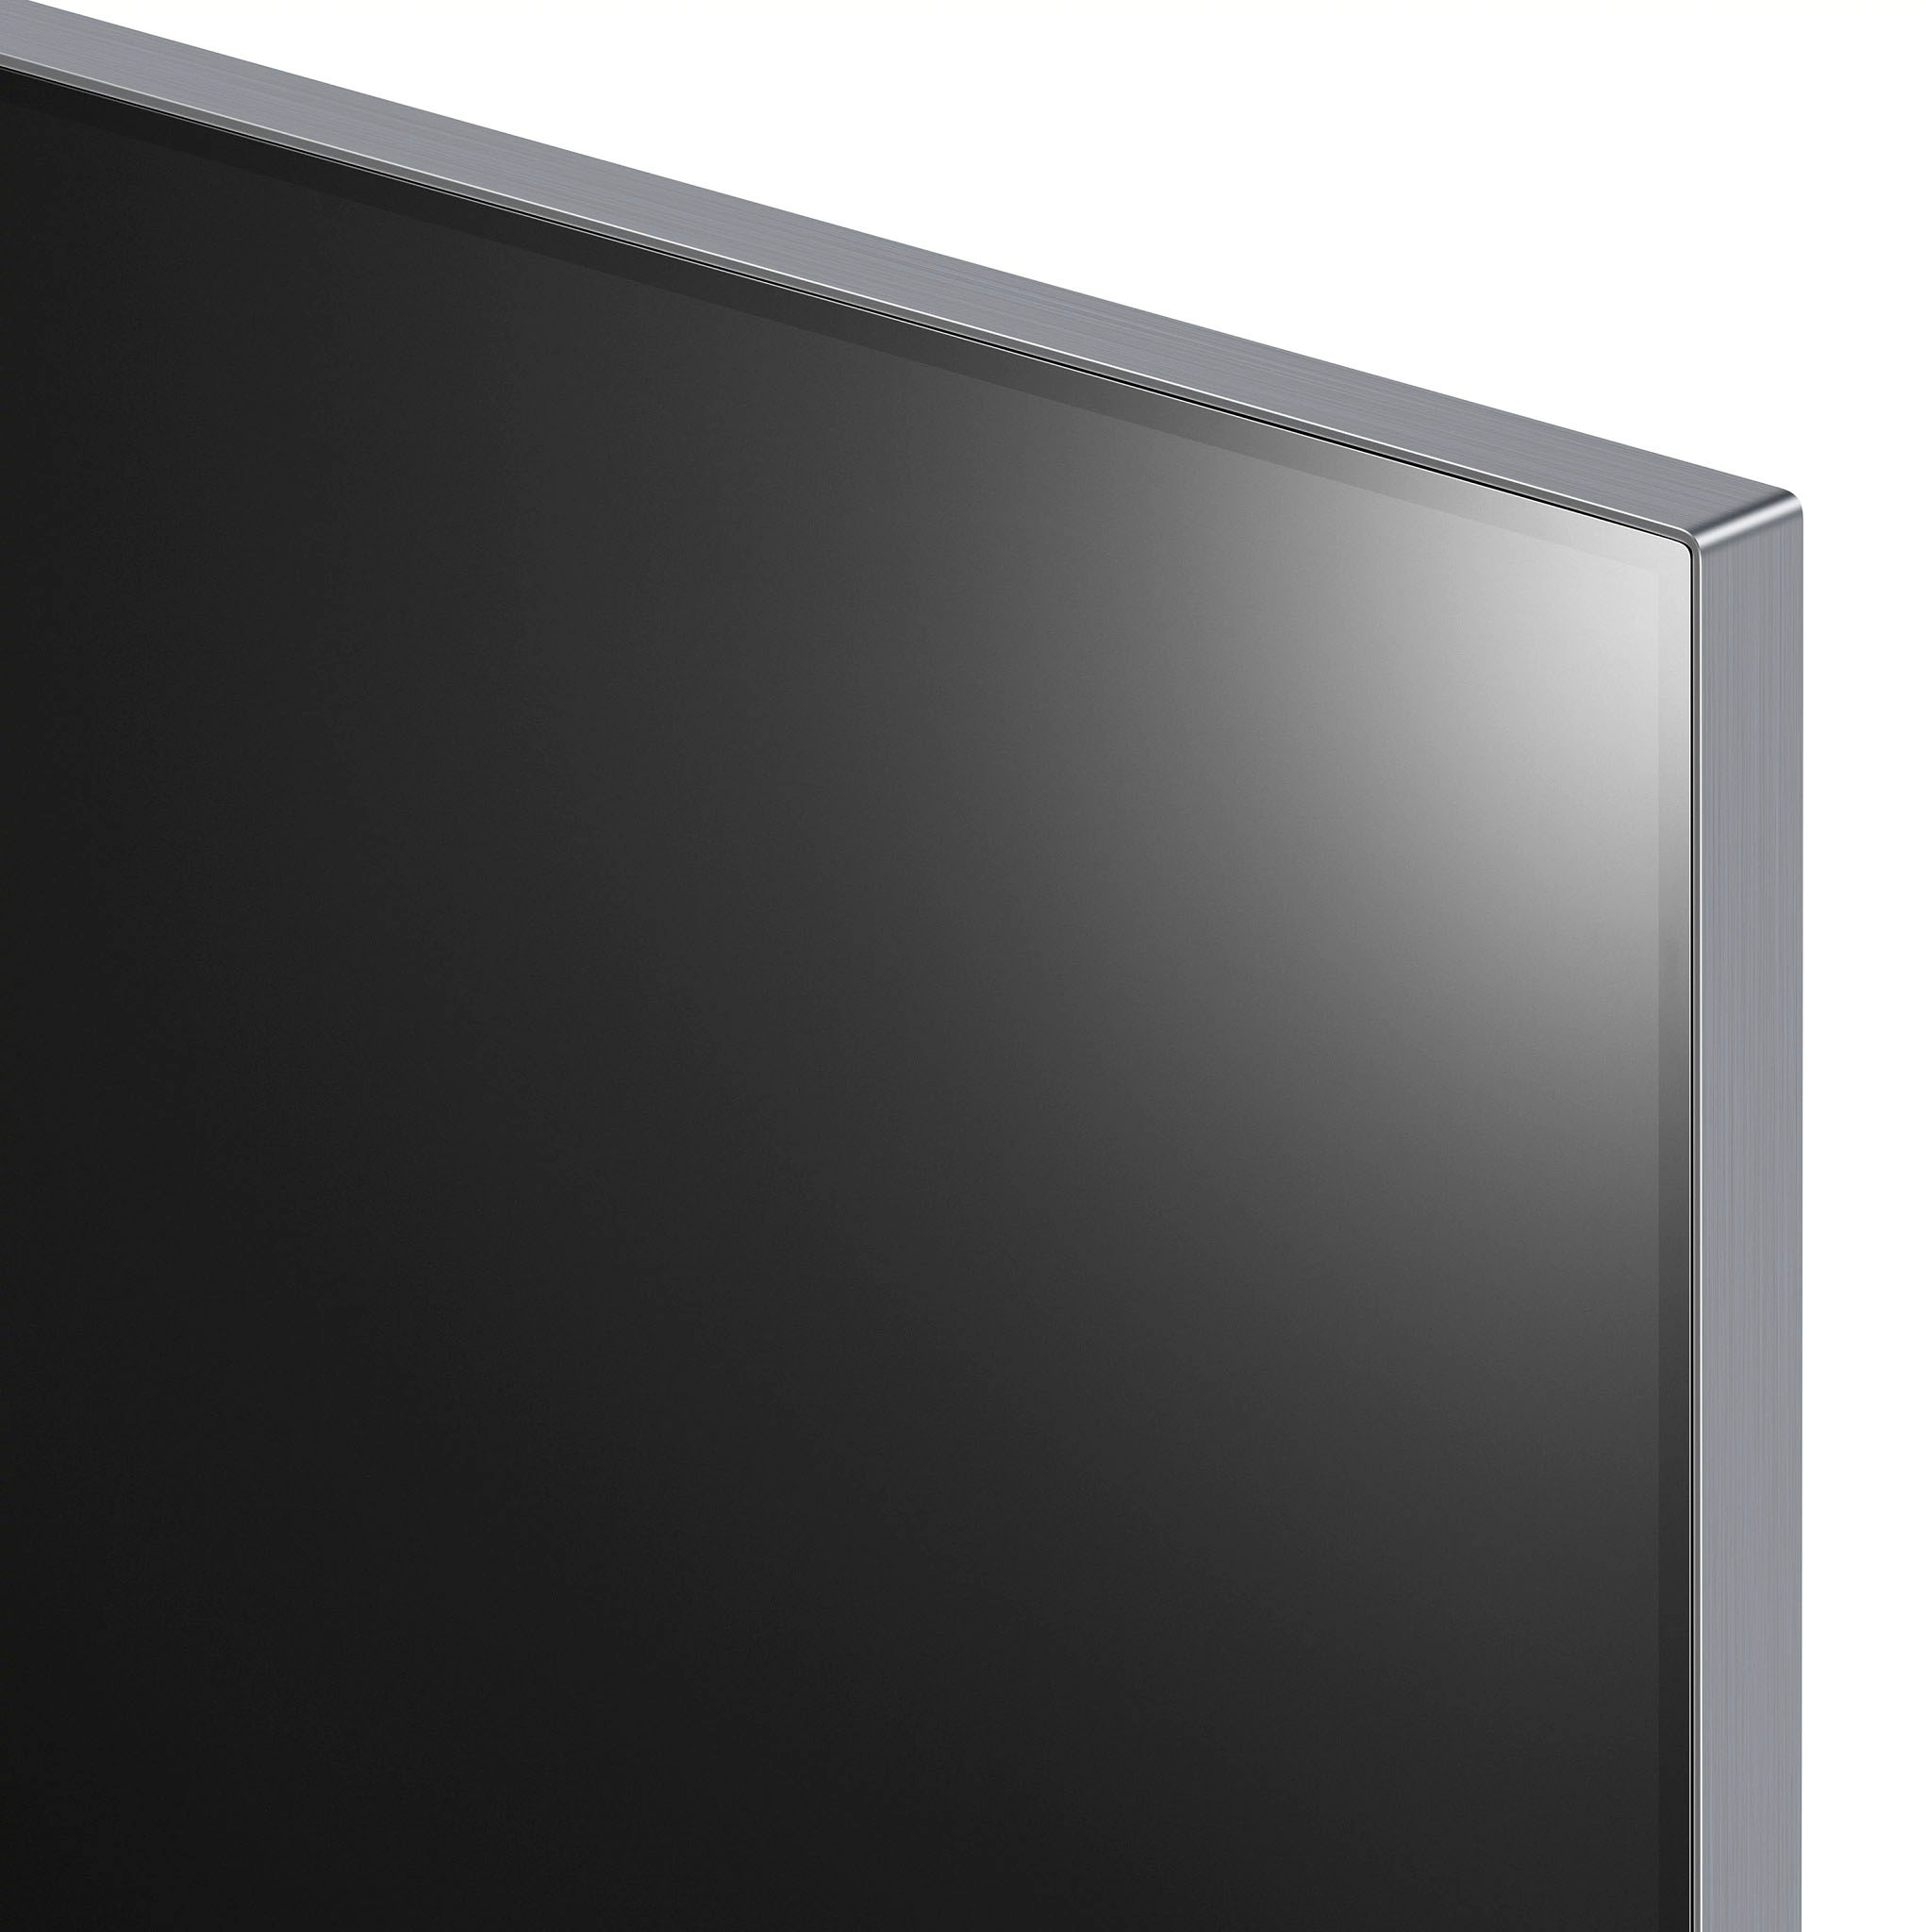 LG - 65 Class G3 Series OLED evo 4K UHD Smart WebOS TV